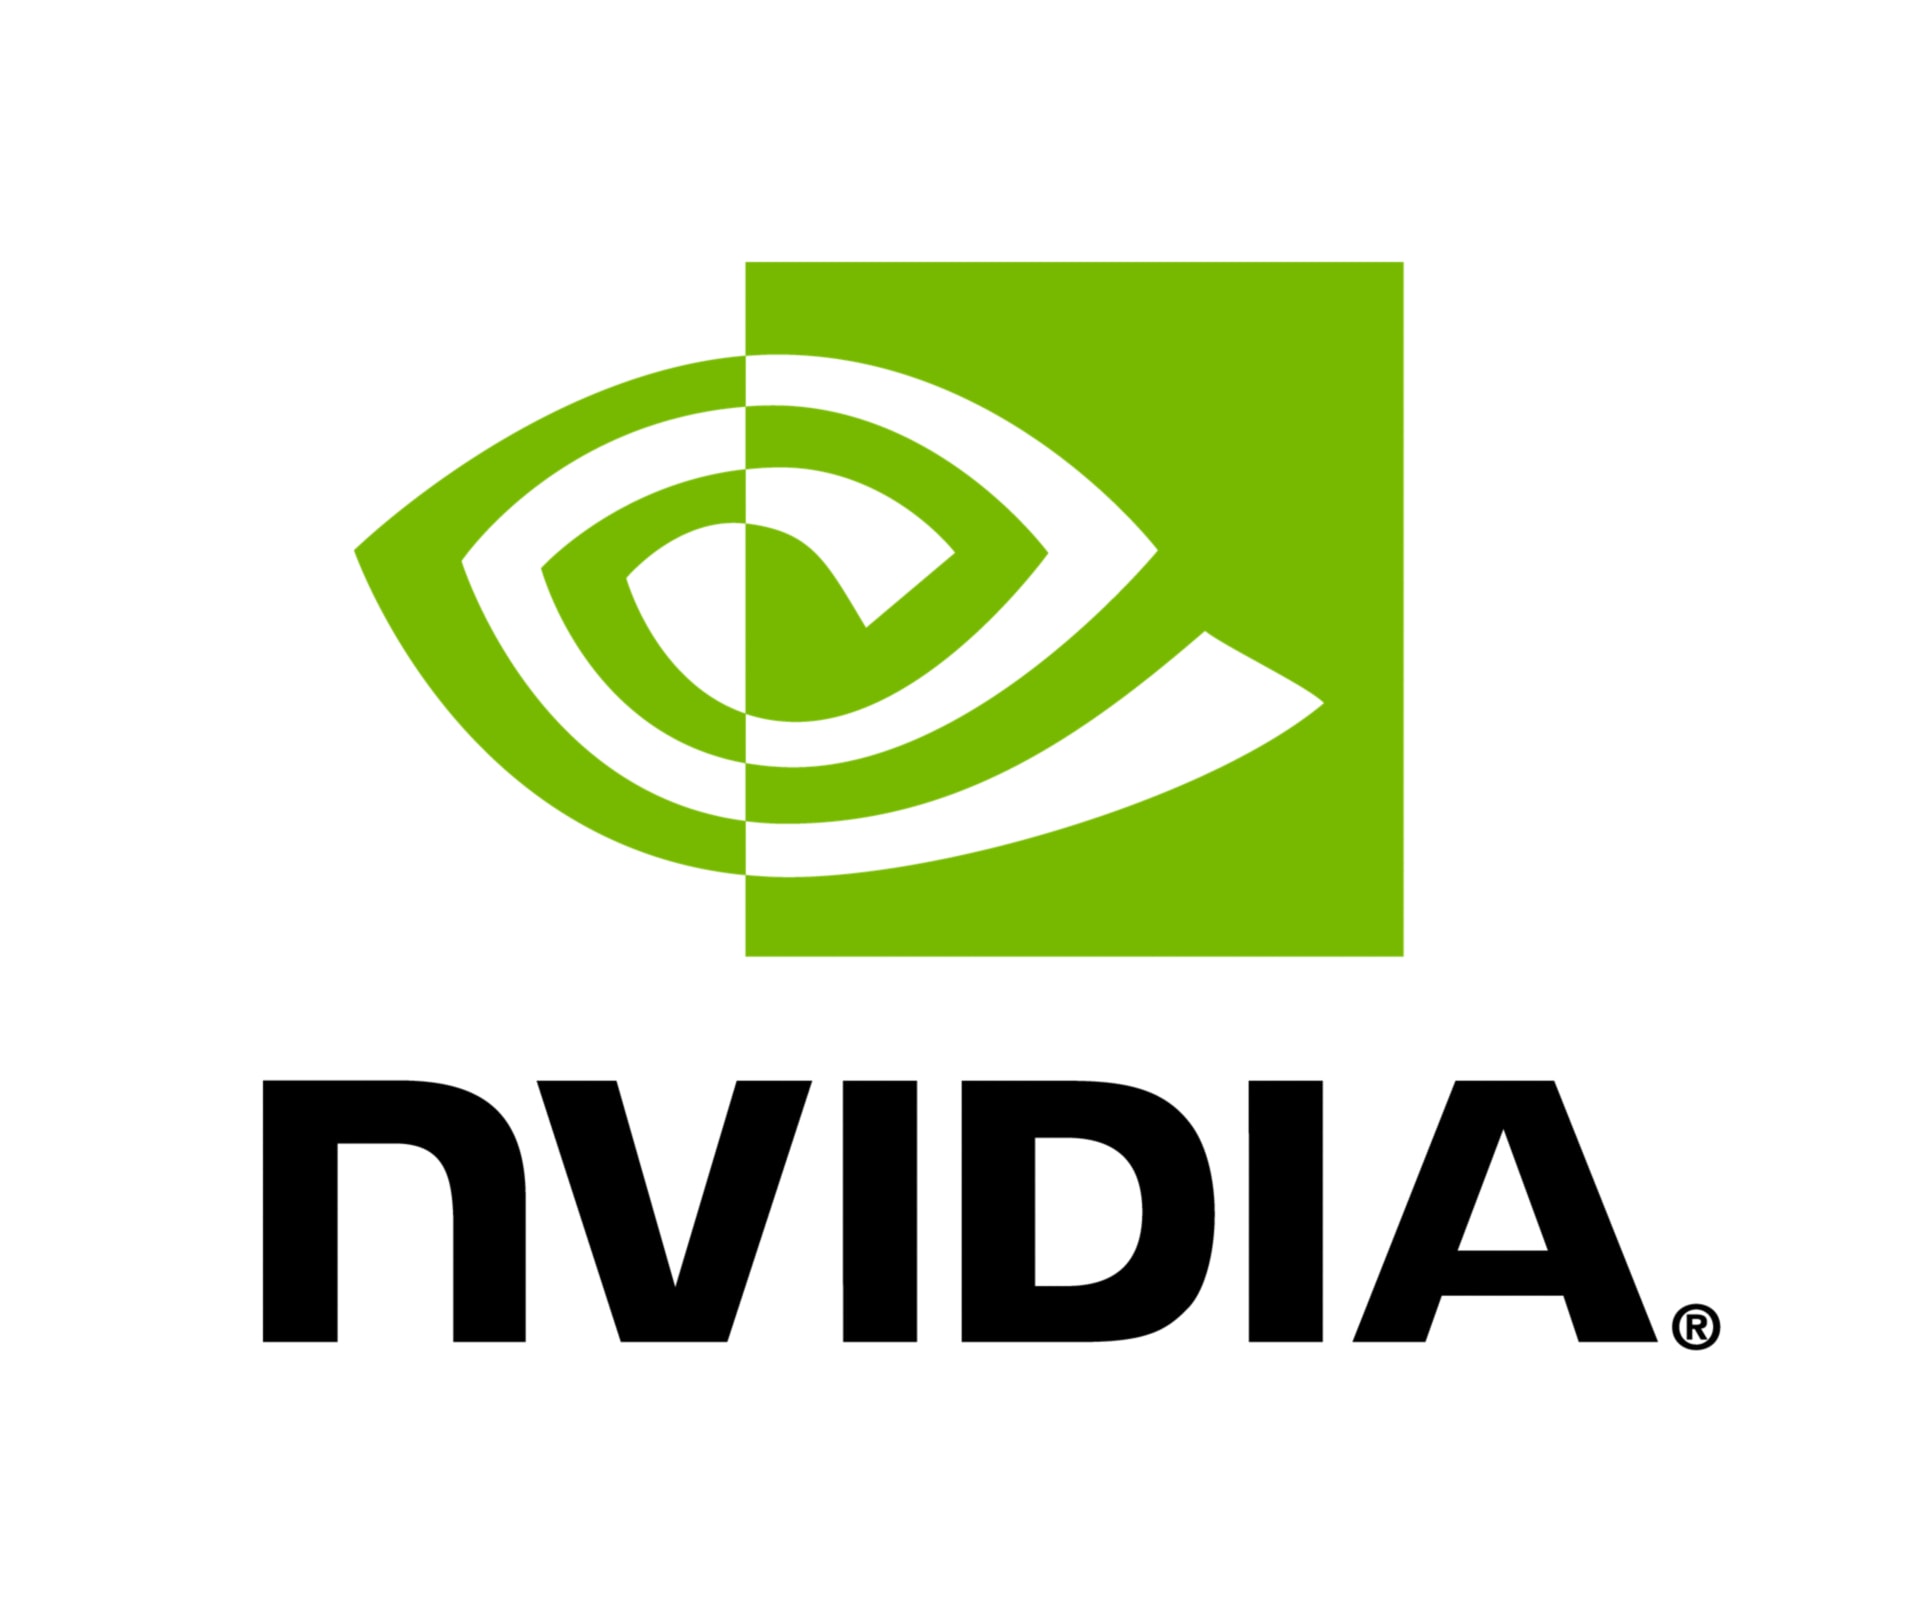 NVIDIA Grid Quadro Virtual Data Center Workstation - subscription license renewal (10 months) - 1 concurrent user